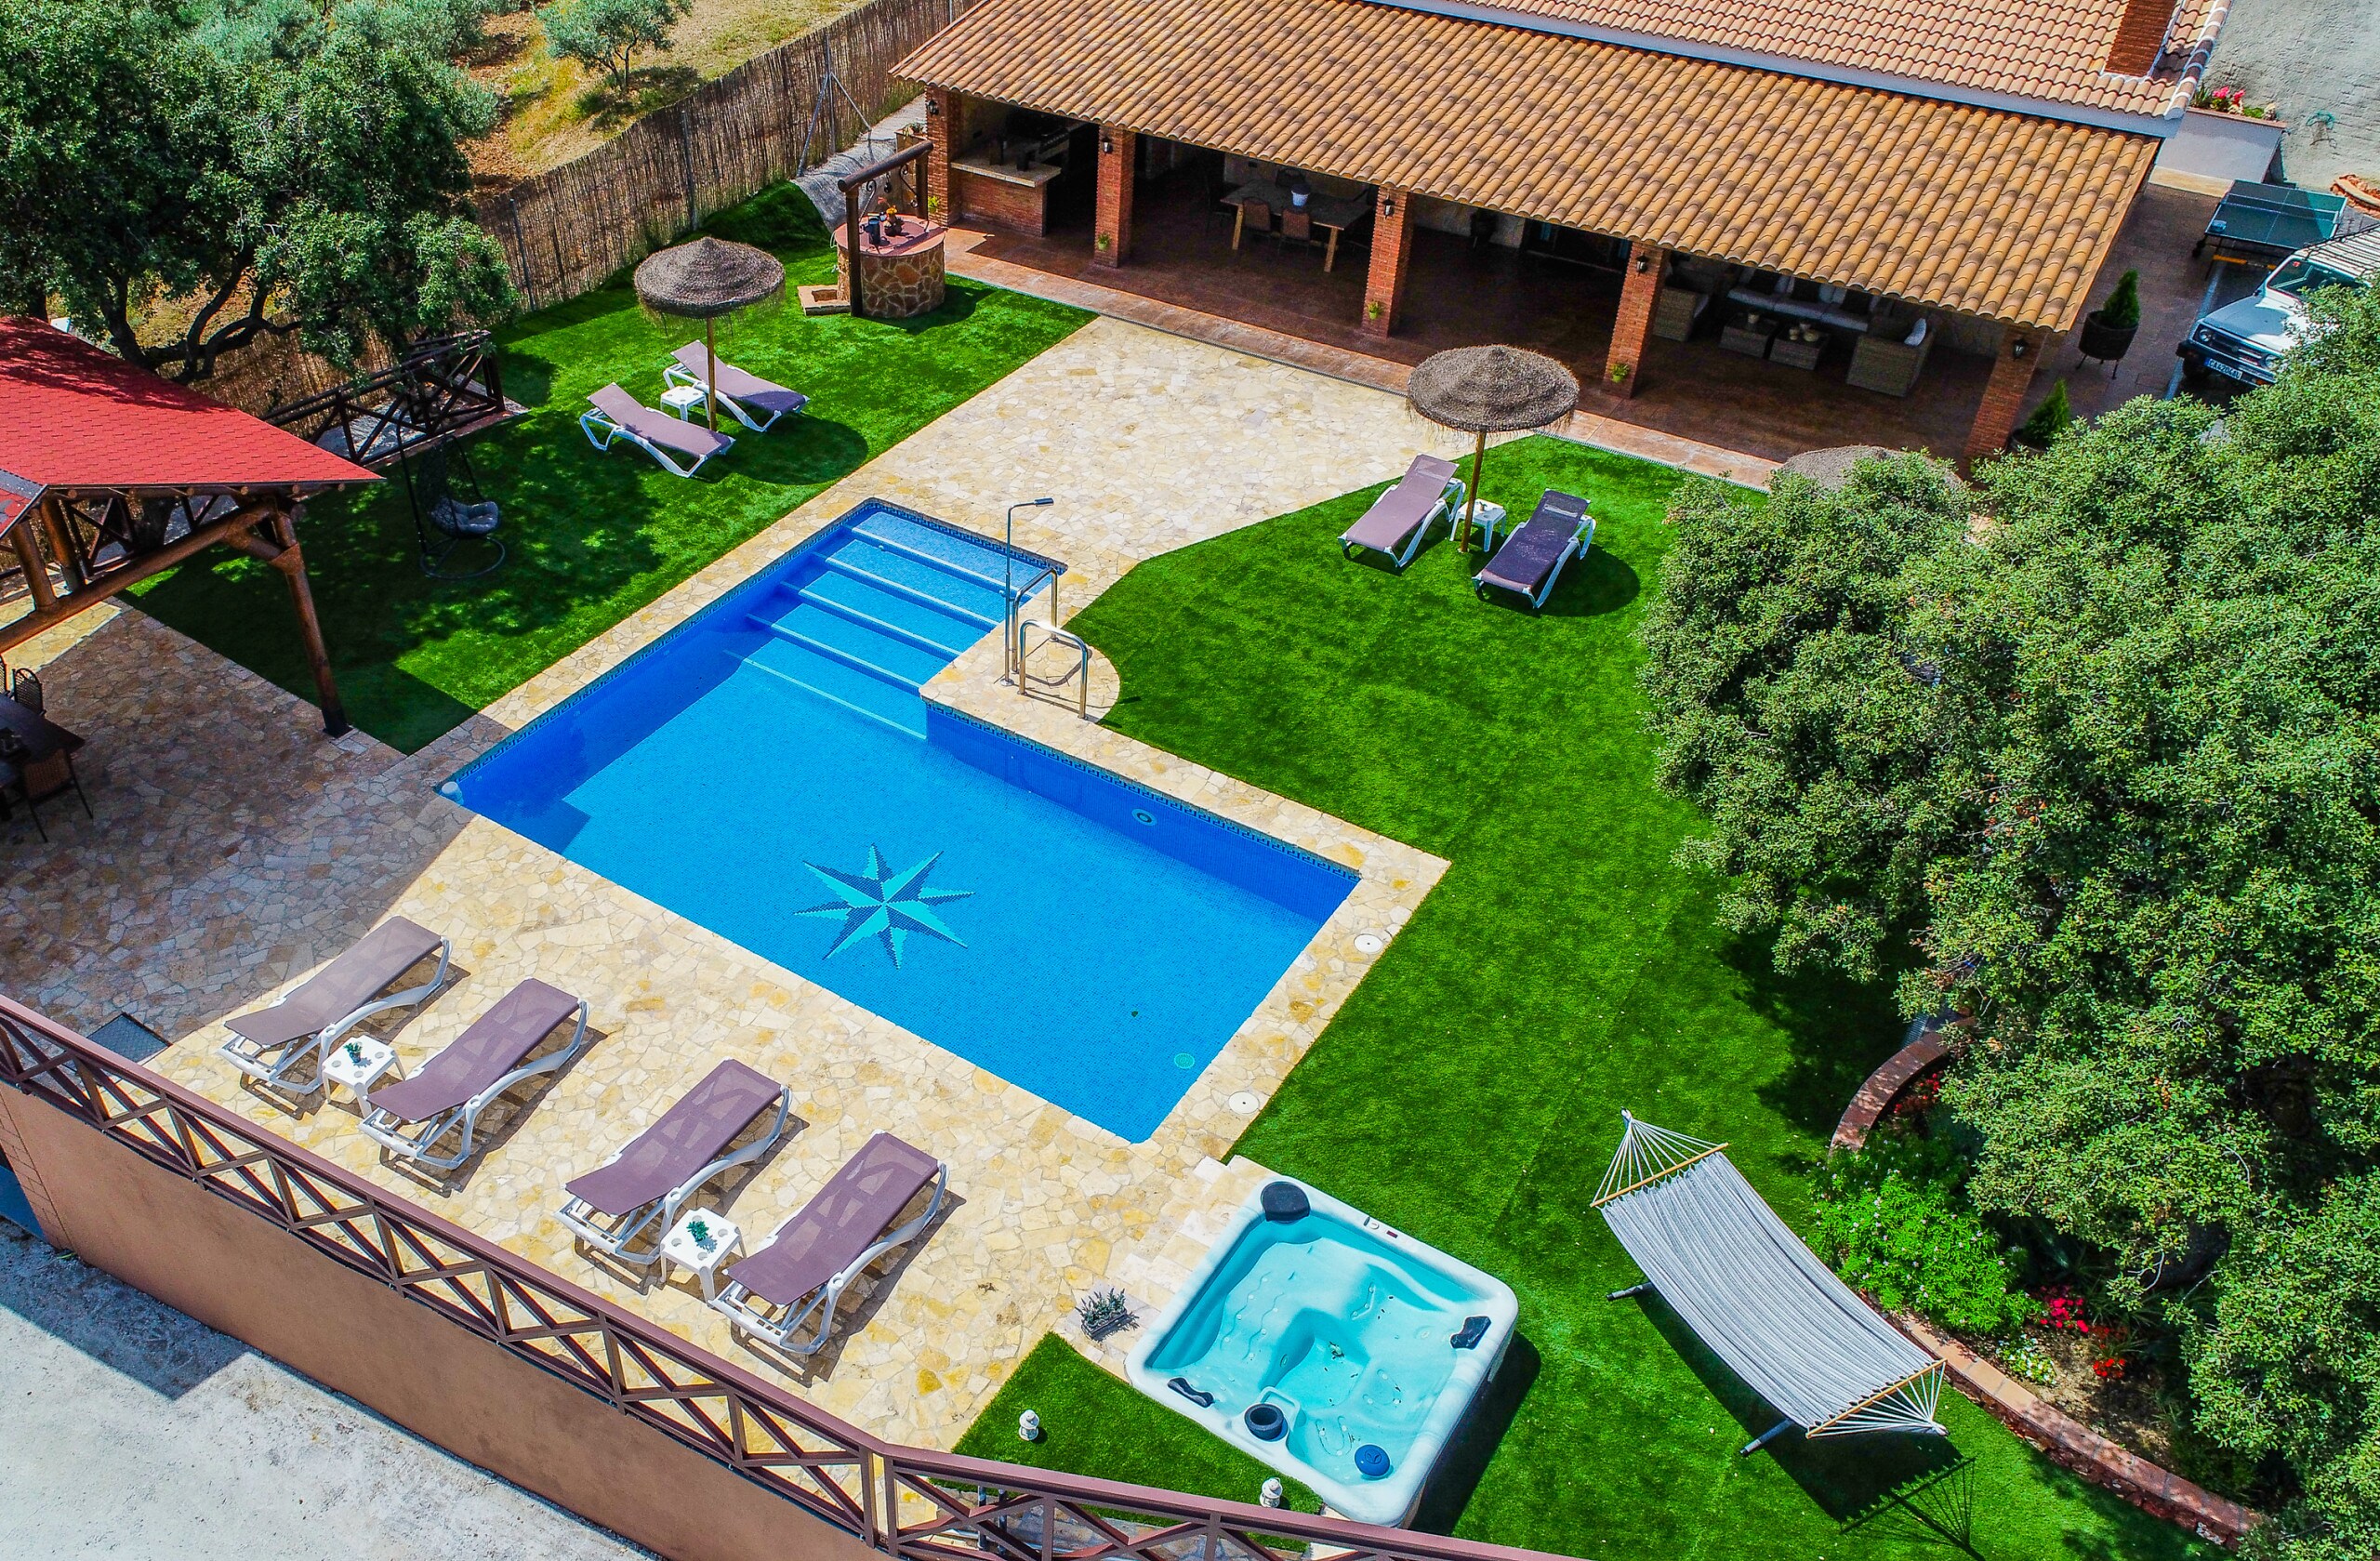 Enjoy the private pool of this villa in Alhaurín el Grande